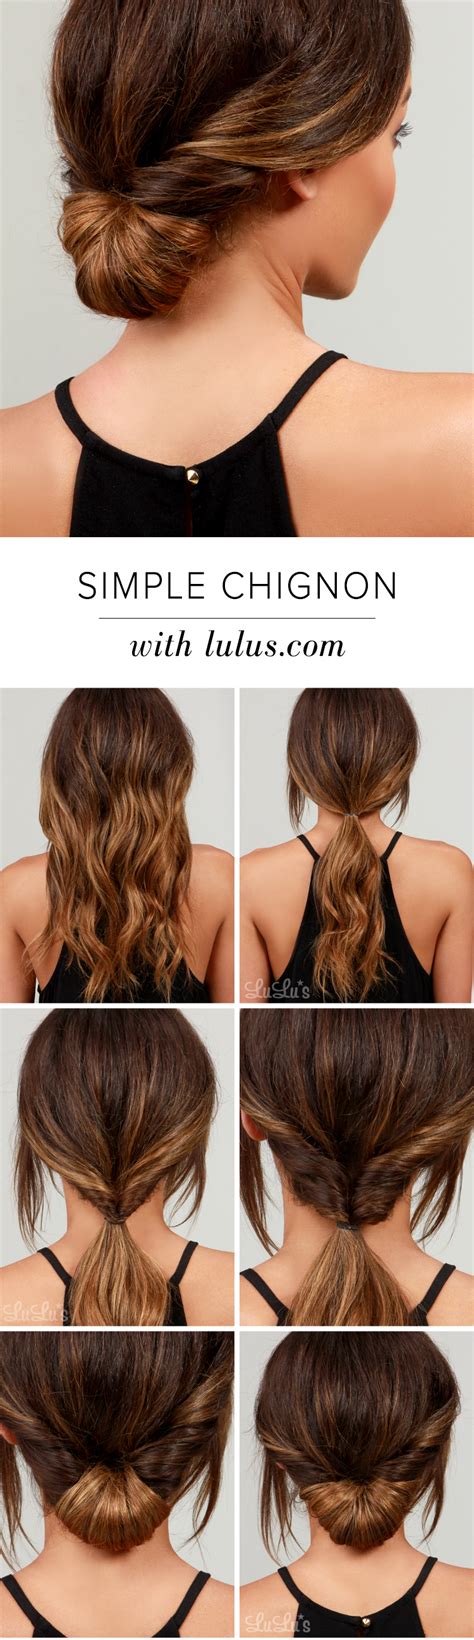 lulus how to simple chignon hair tutorial fashion blog